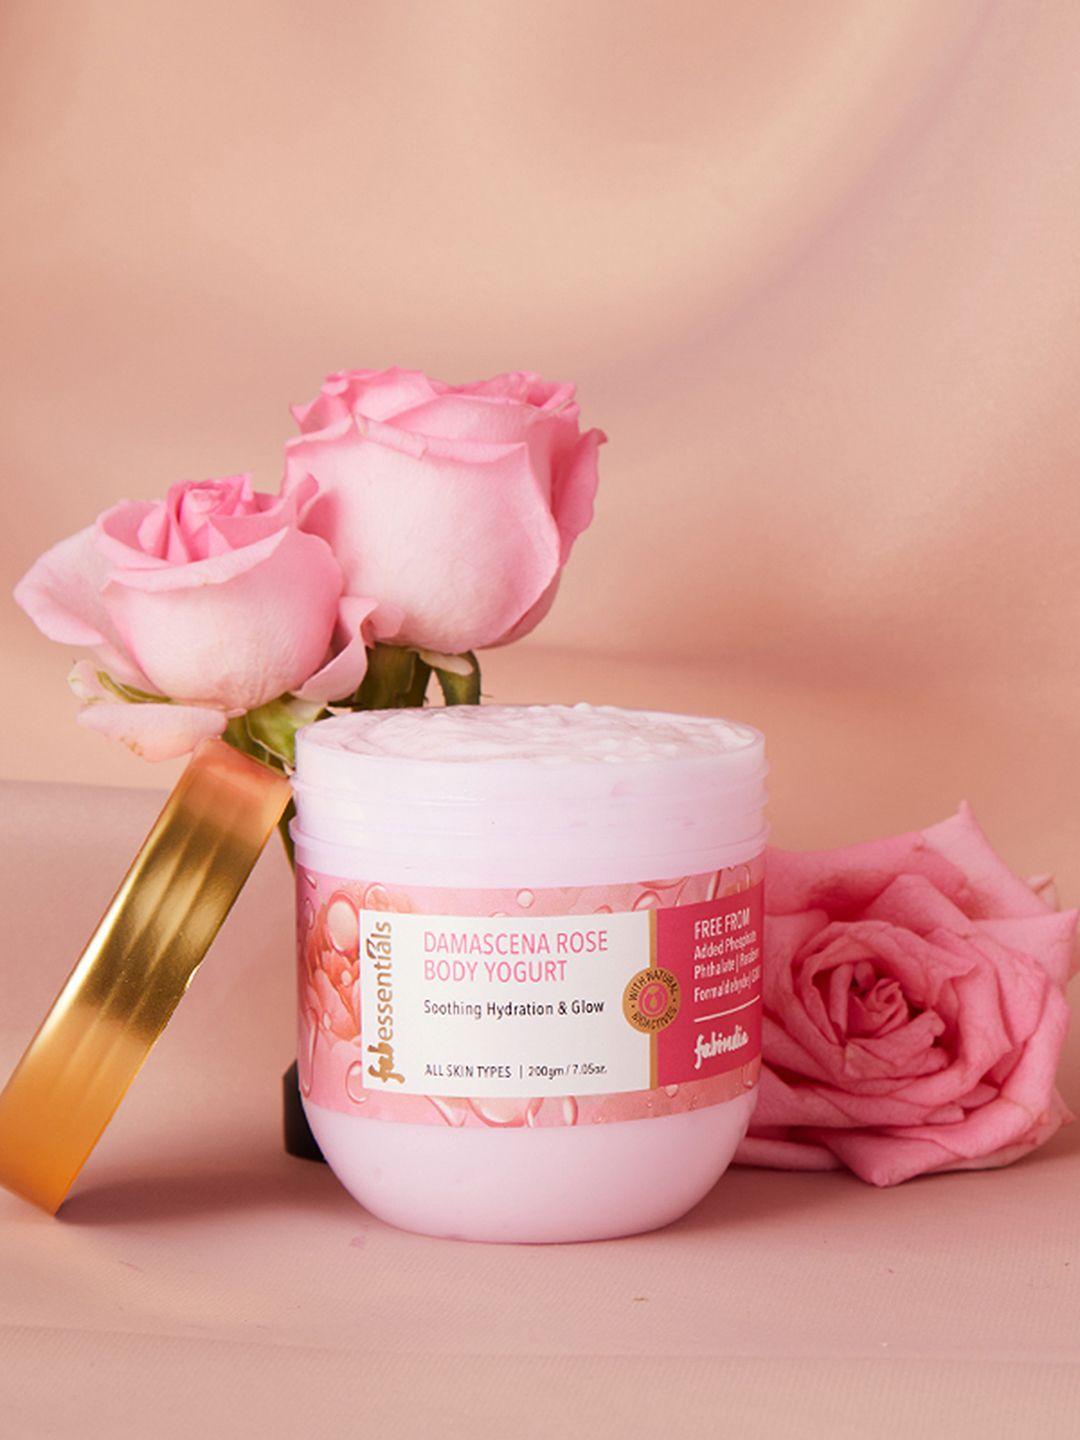 fabindia damacena rose body yogurt - 200 g